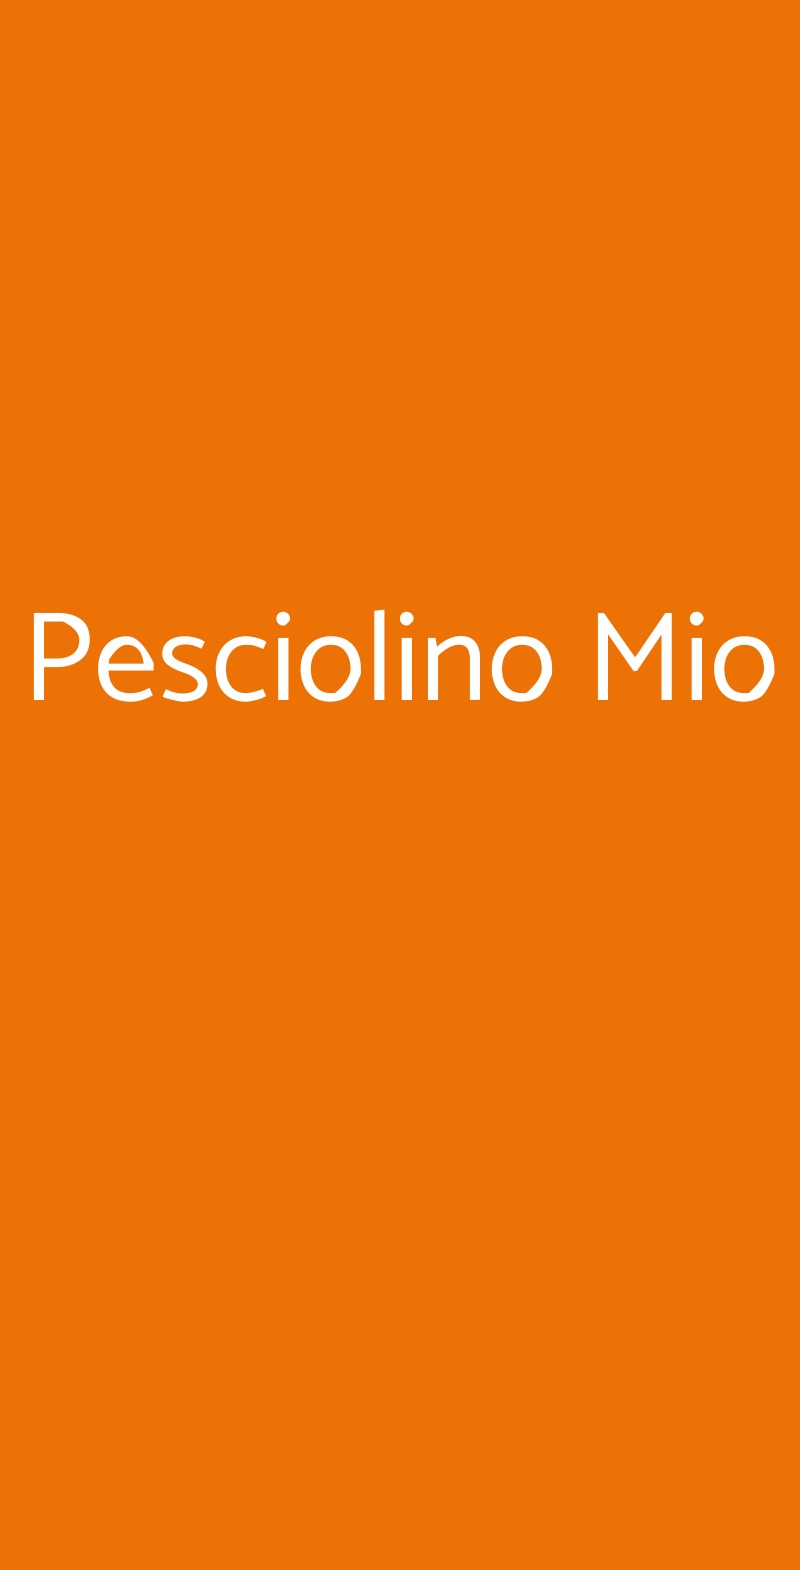 Pesciolino Mio Milano menù 1 pagina